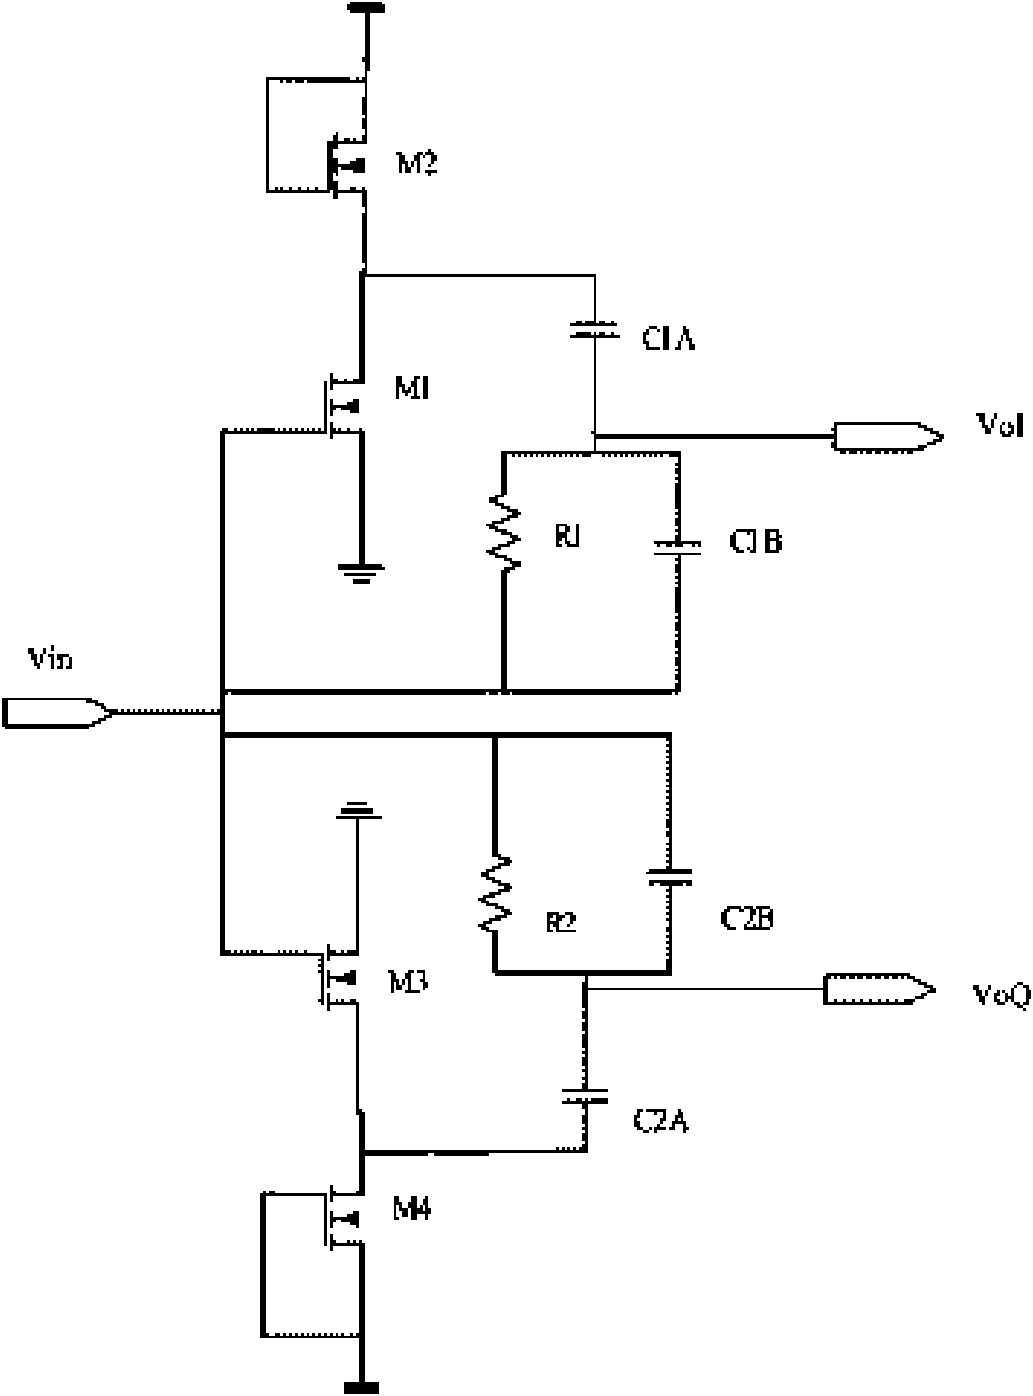 NMOS transistor based 90-degree phase shifter